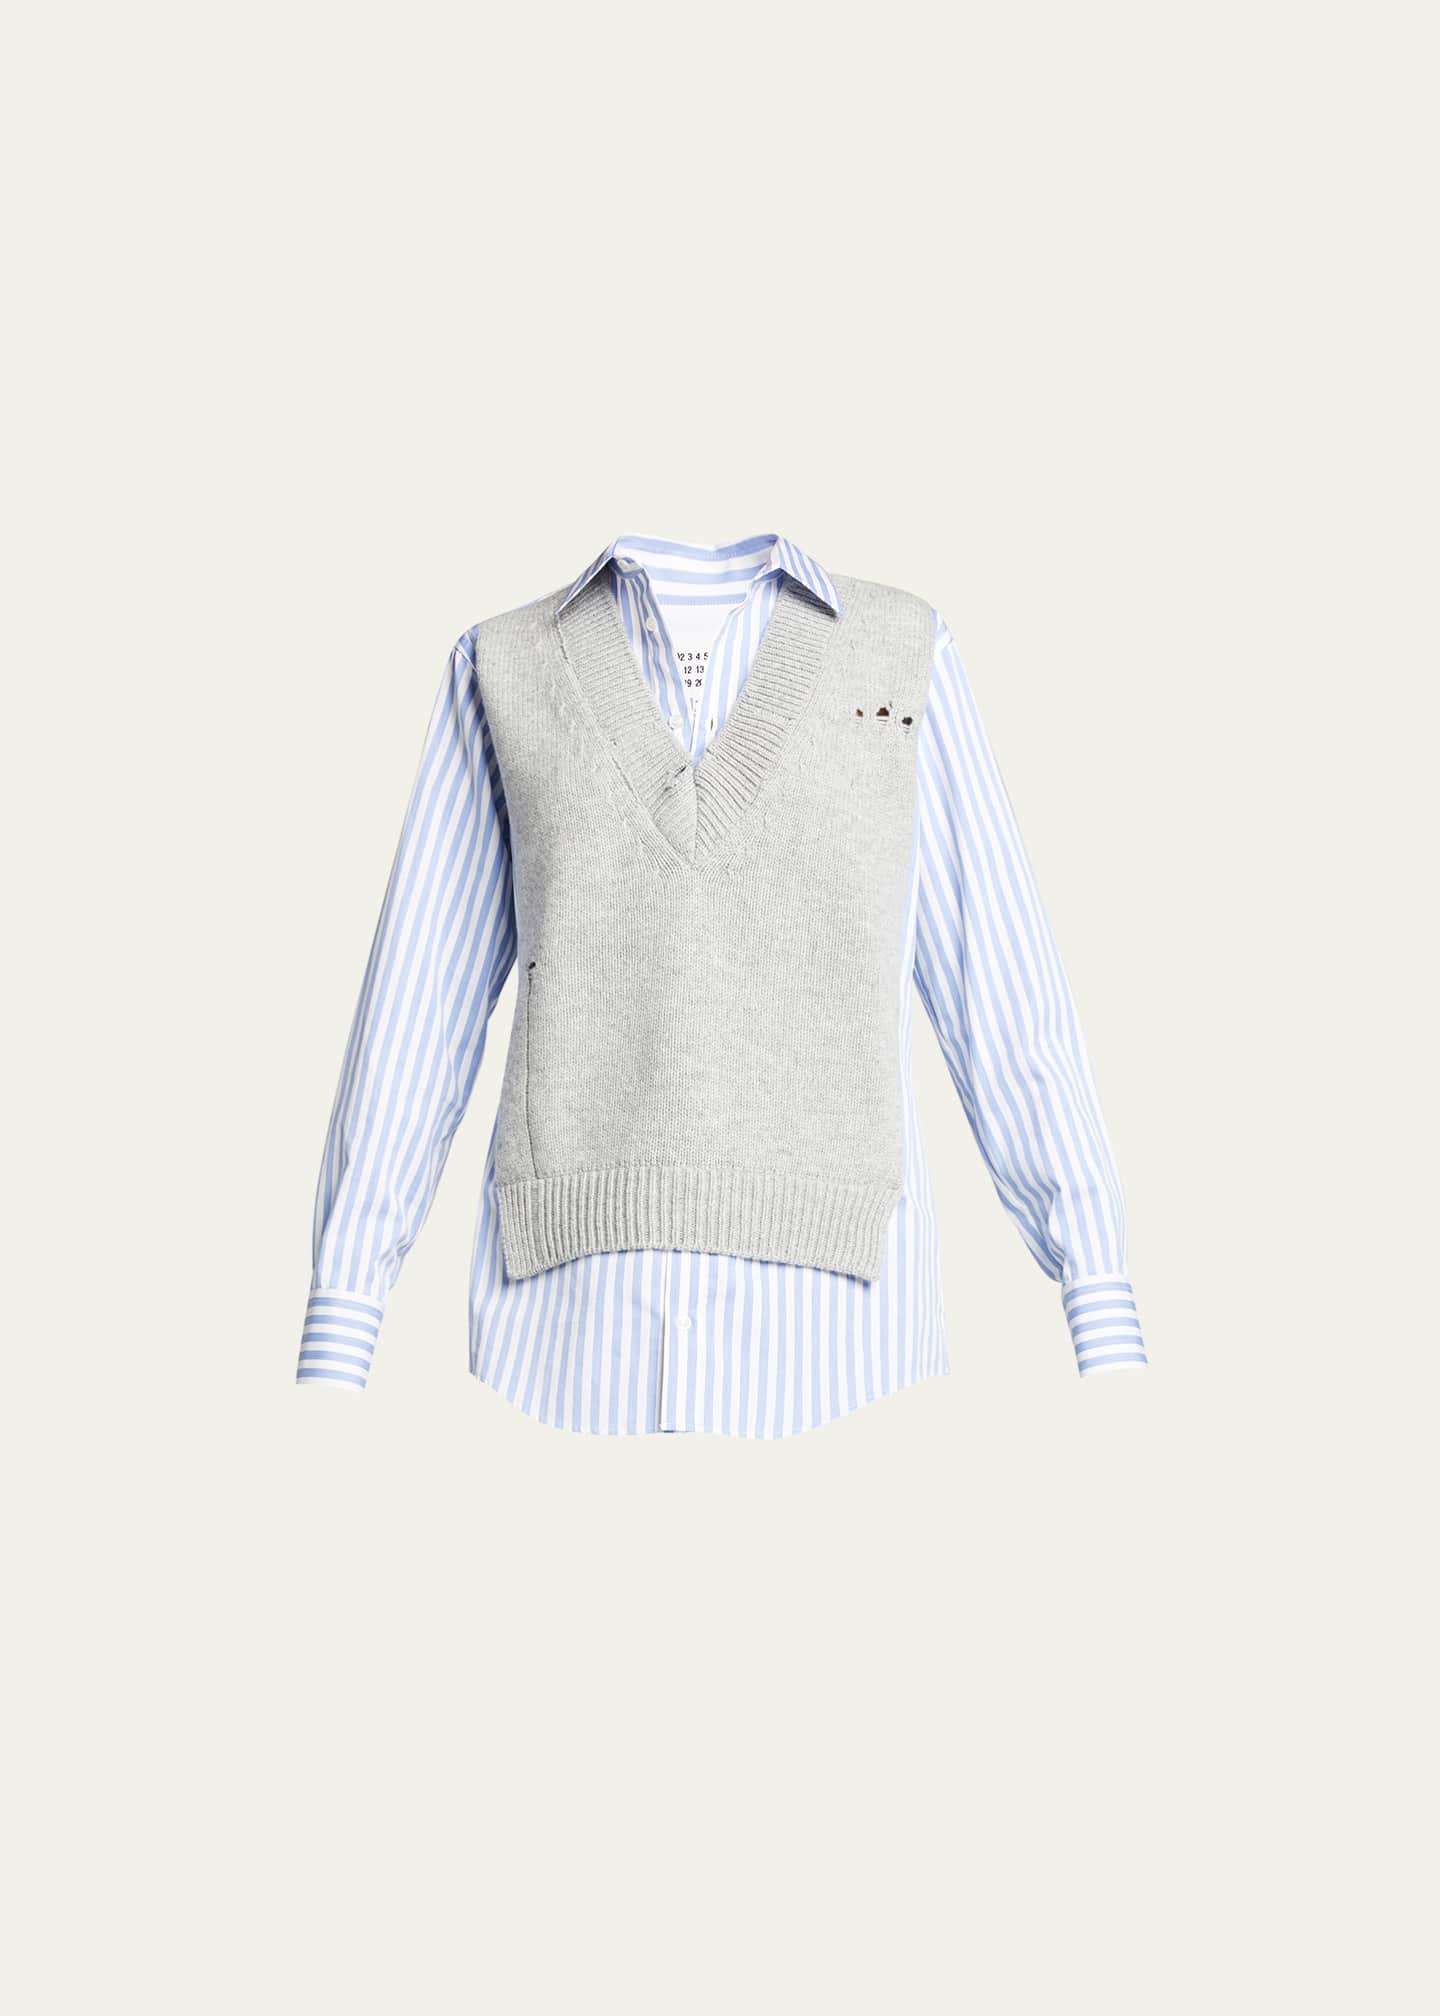 Maison Margiela Mixed-Media Sweater Vest Shirt - Bergdorf Goodman